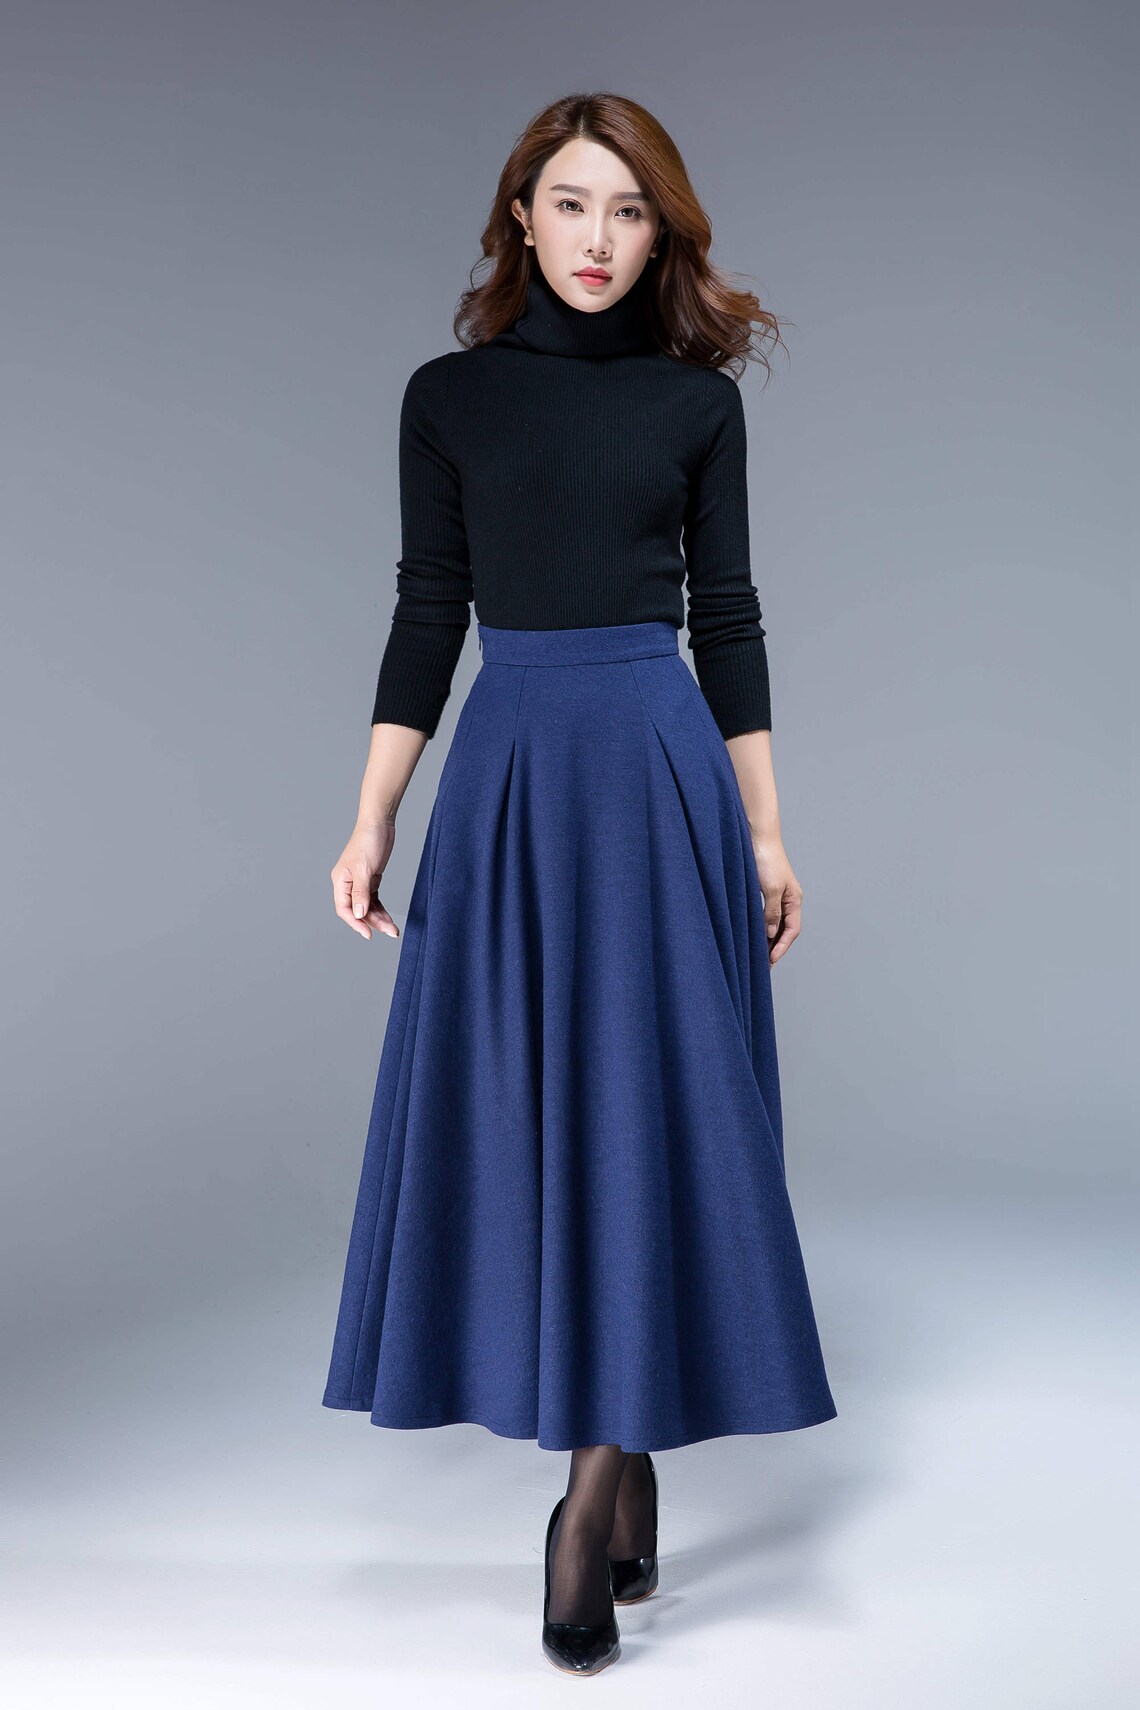 Blue wool skirt high waisted skirt skirt with pocekts | Etsy